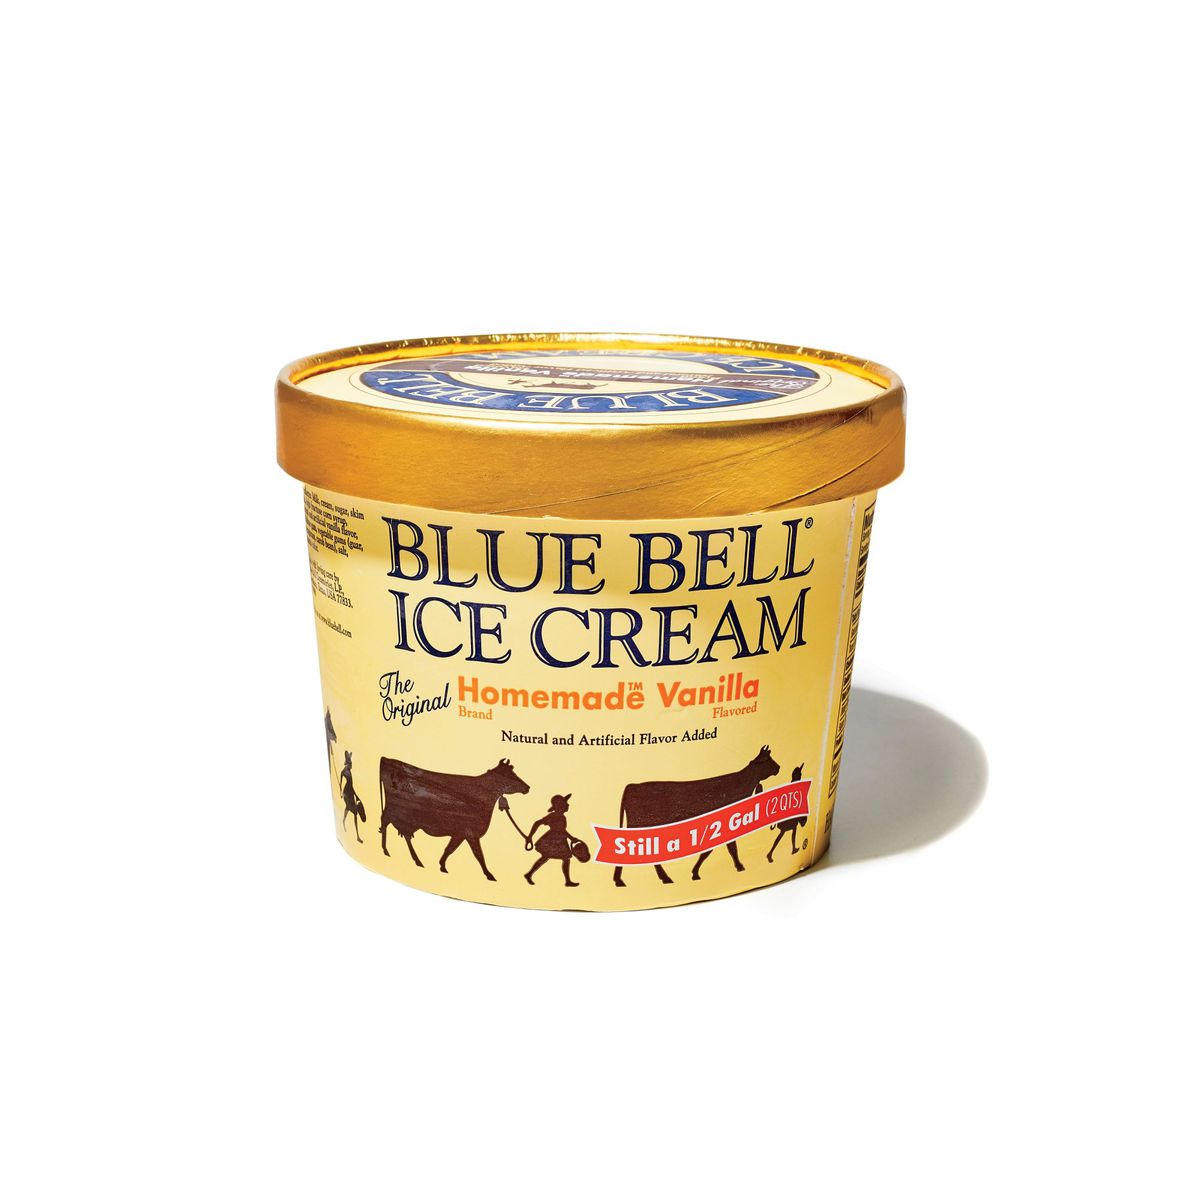 2018 Food Awards: Blue Bell Ice Cream